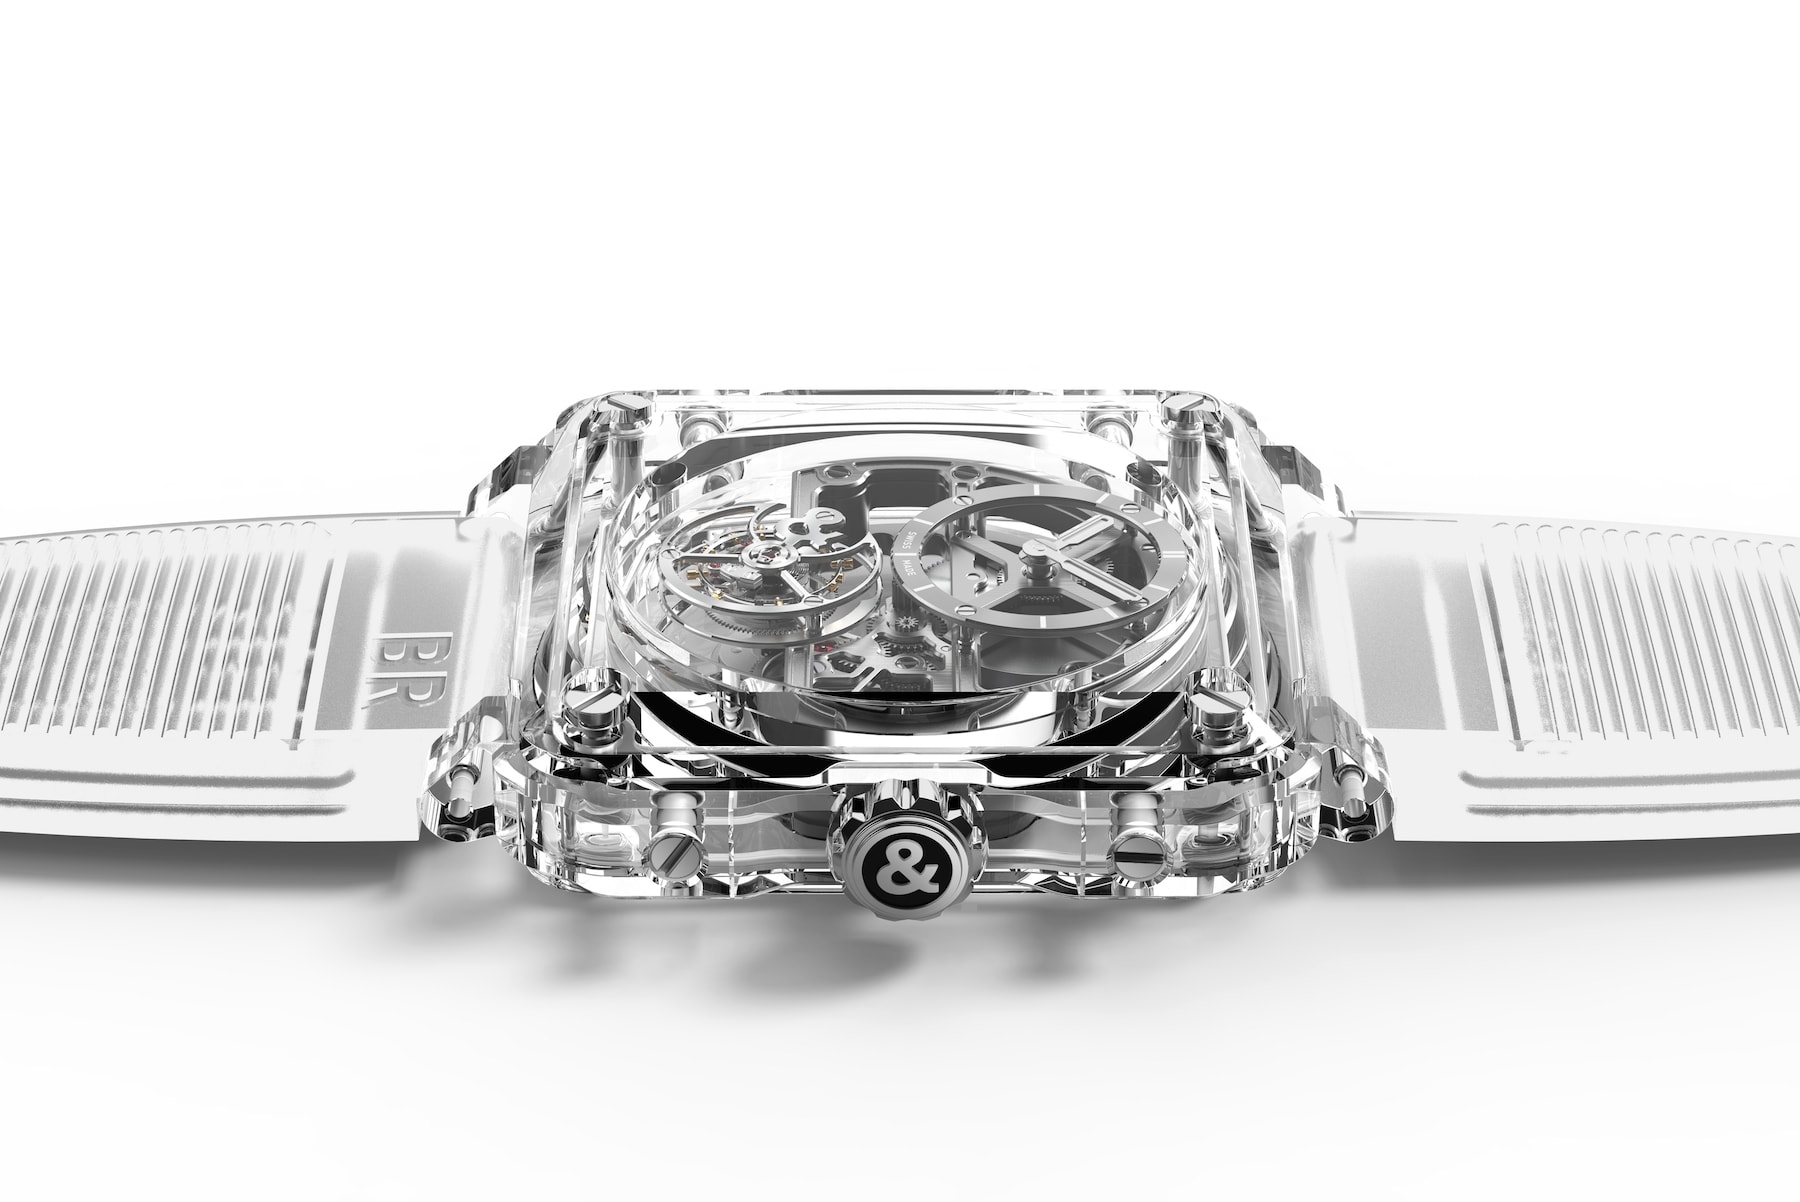 Bell & Ross 推出全新 BR-X1 Skeleton Tourbillon Sapphire 透明限量腕錶